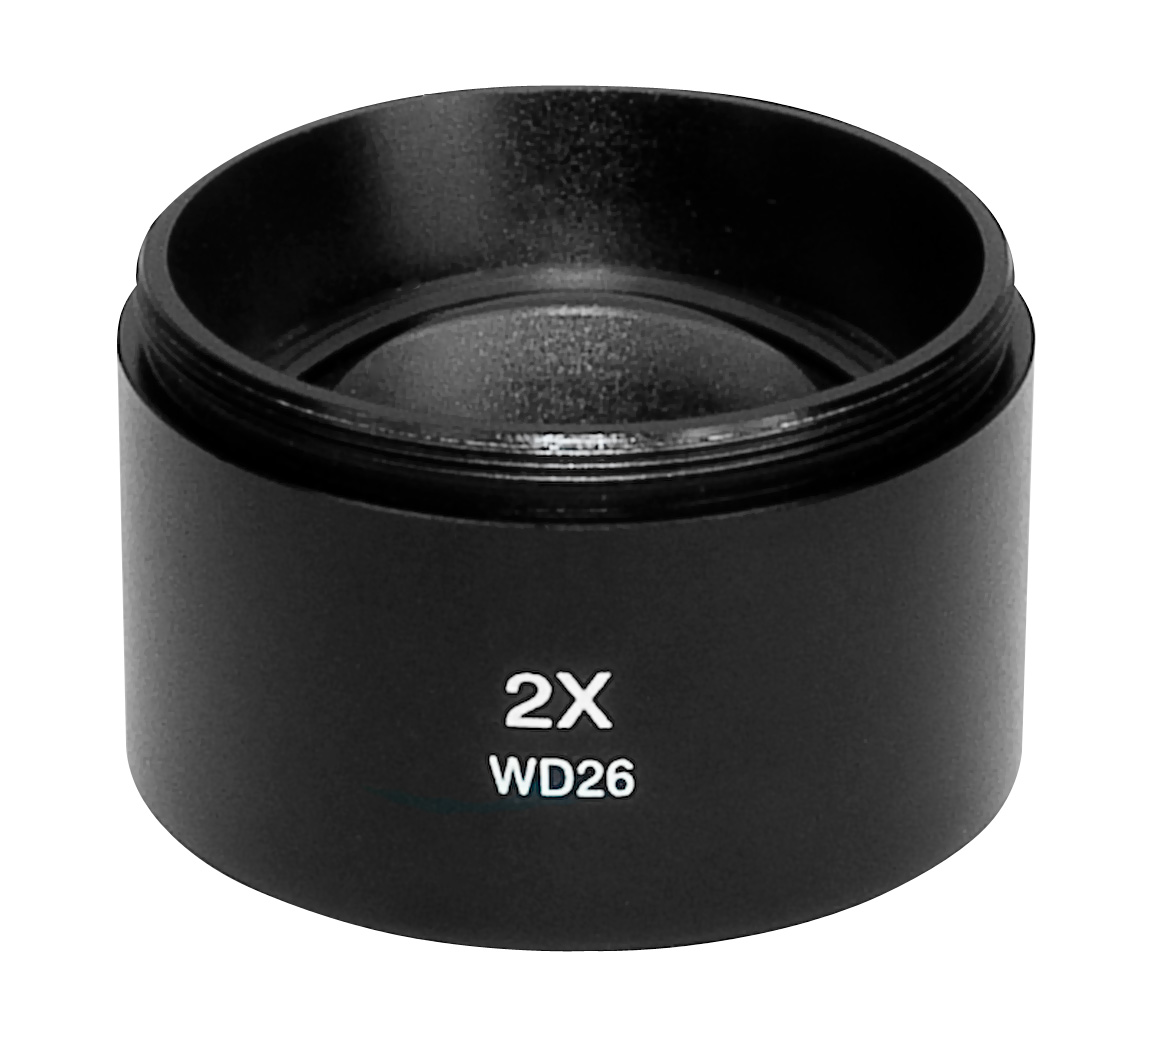 Scienscope SZ-LA-20 2X Objective Lens for SSZ Binocular Series